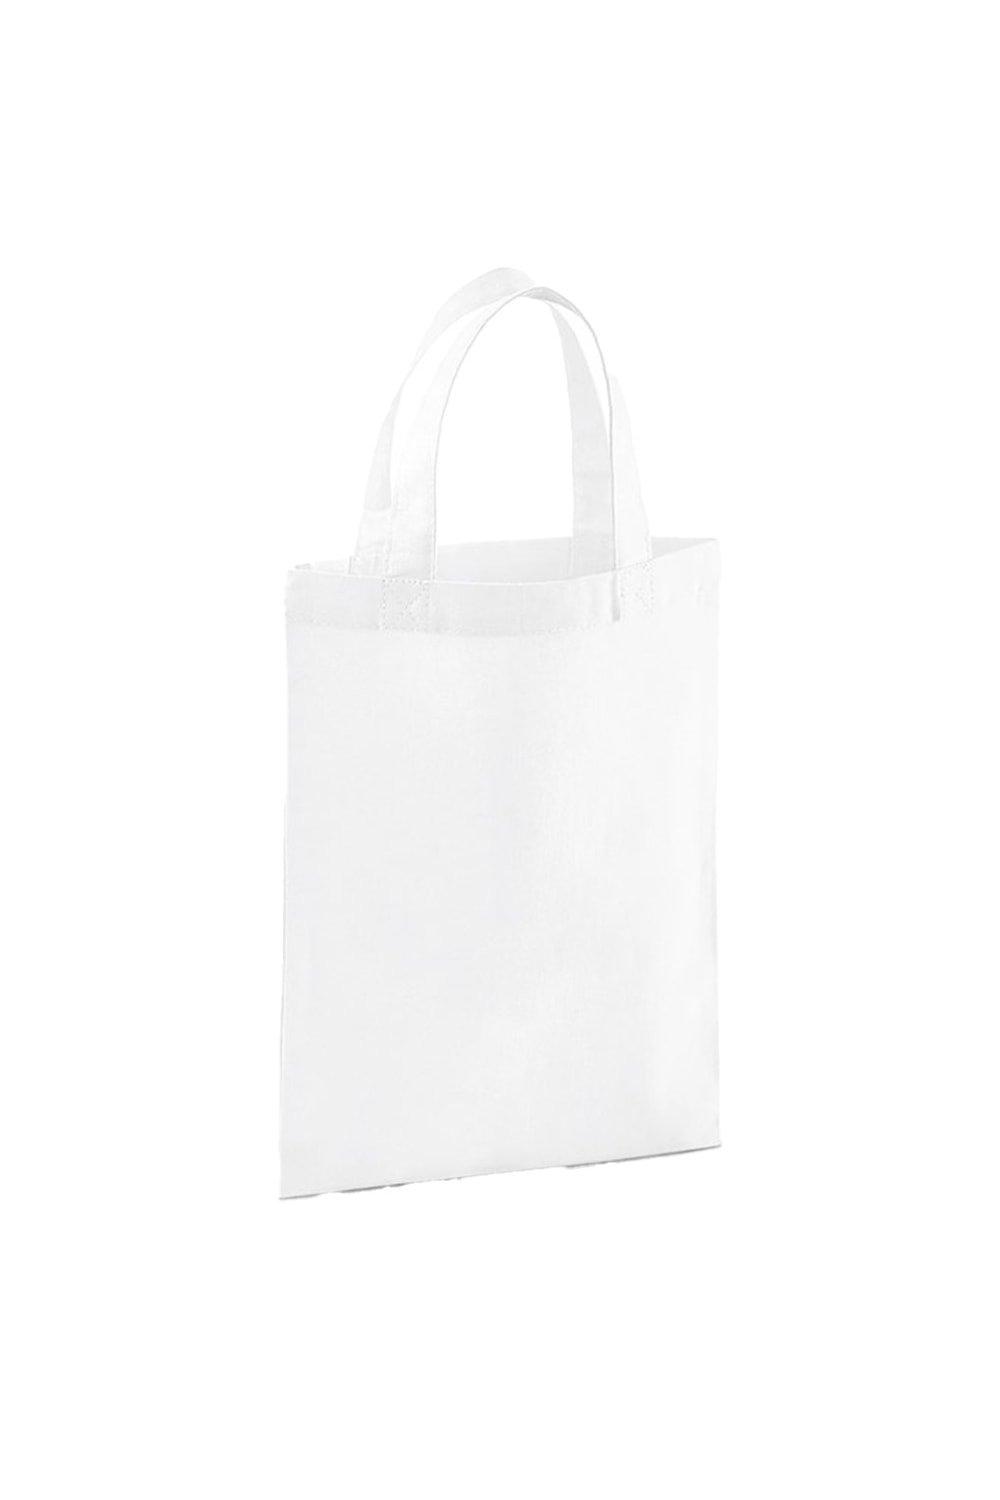 Хлопковая сумка для вечеринок Westford Mill, белый набор шпулек reach bbn 25 1217